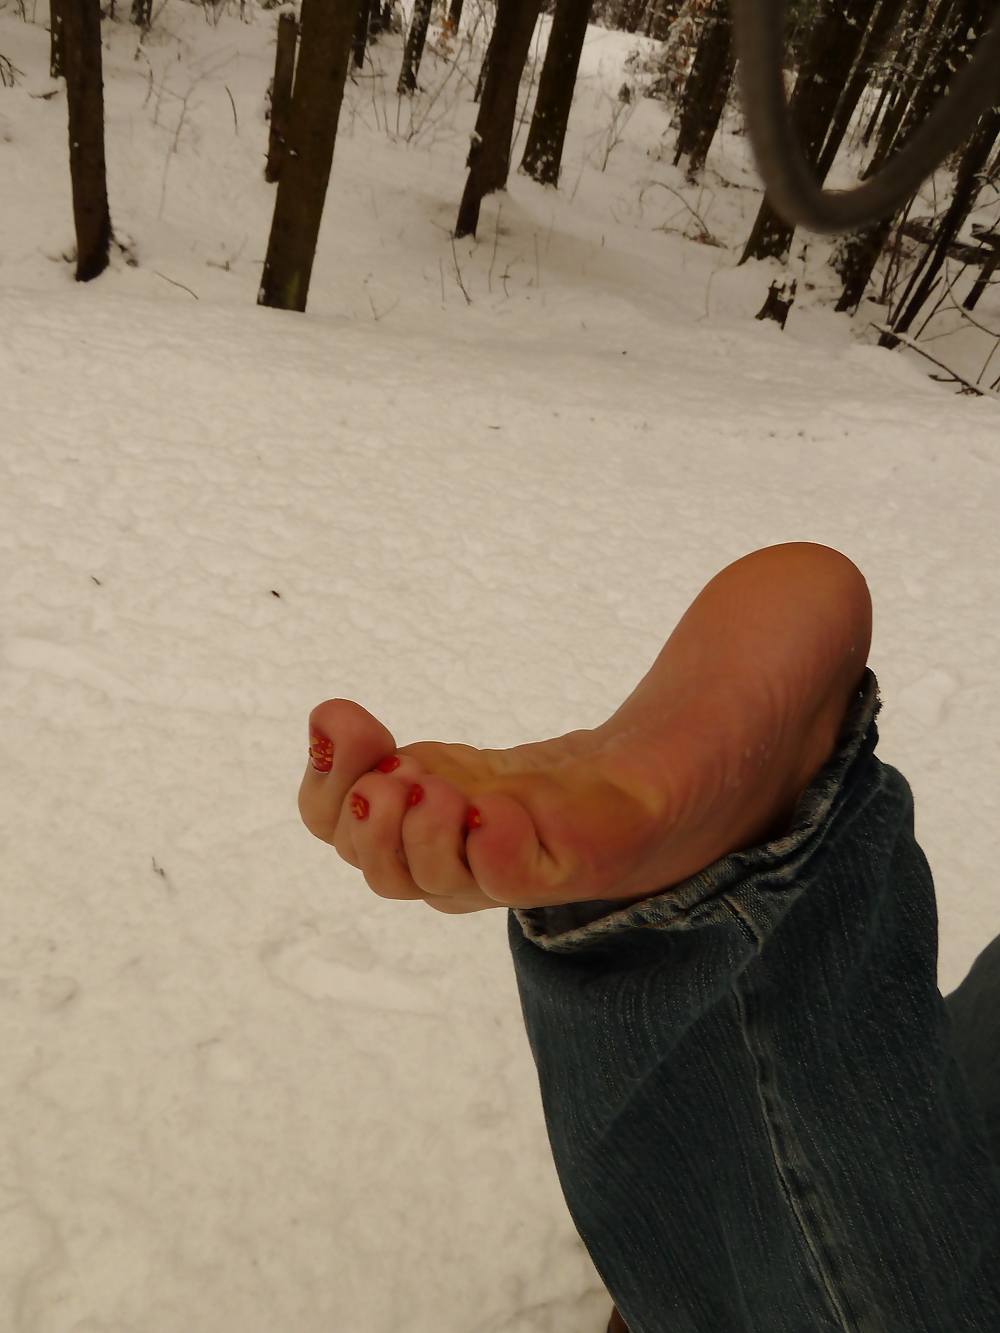 Feet in snow #8299008